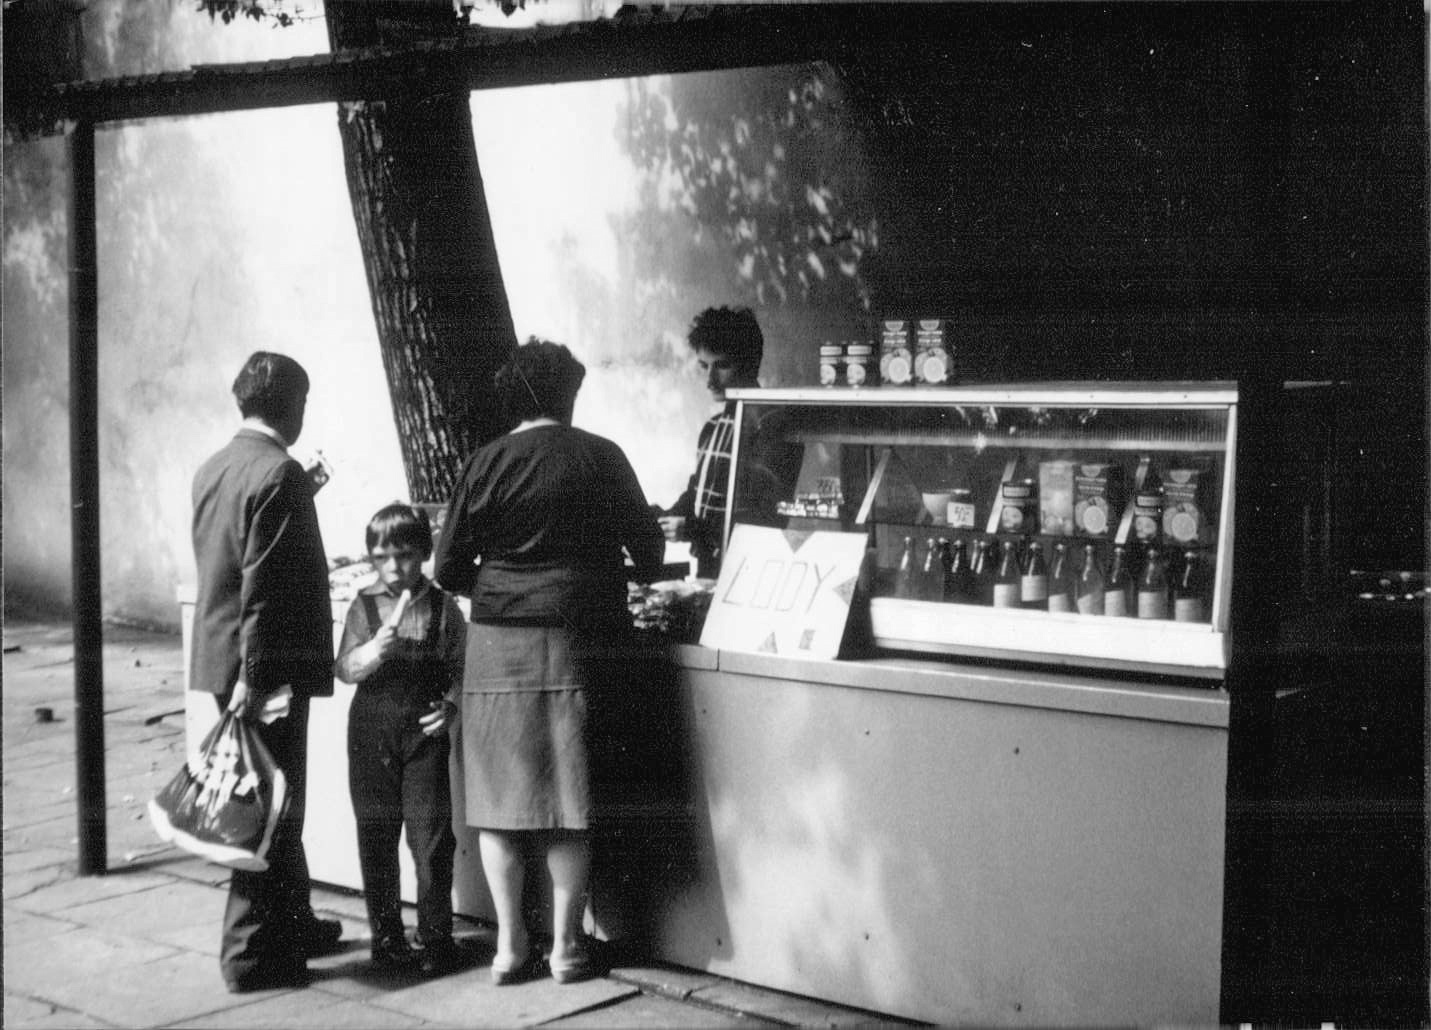 Ice cream stand, Gdańsk, 1990